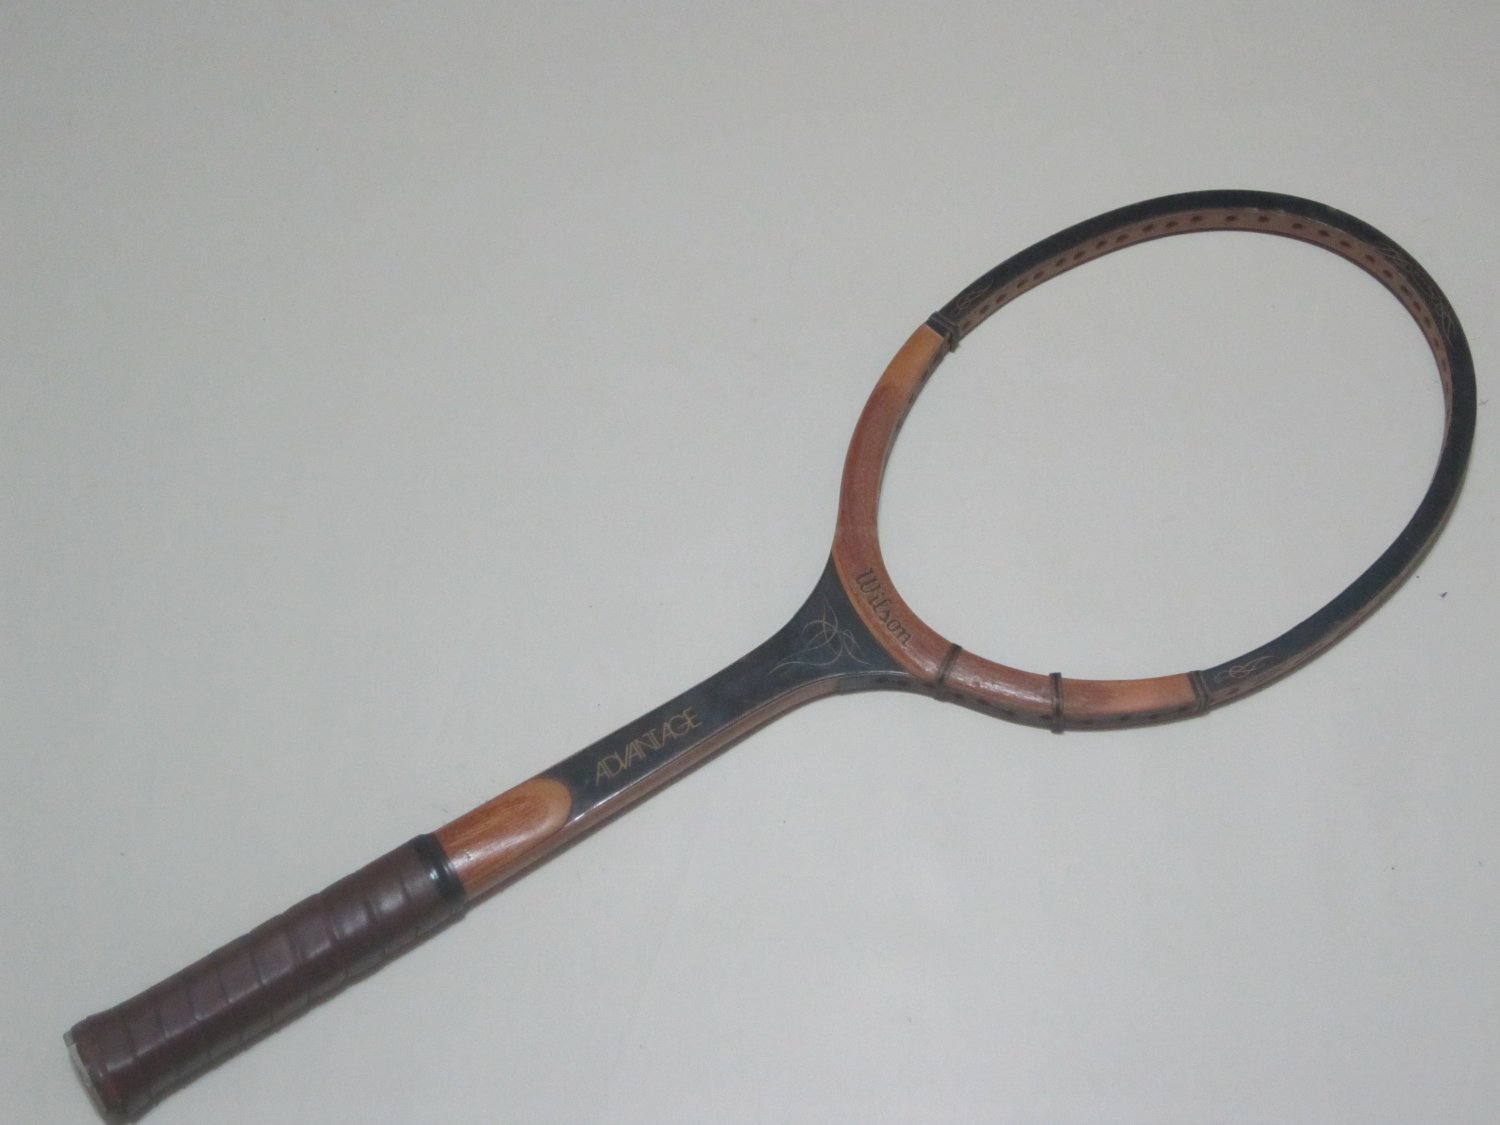 Wilson Advantage Wood Tennis Racquet 4 1/2(WIW58)